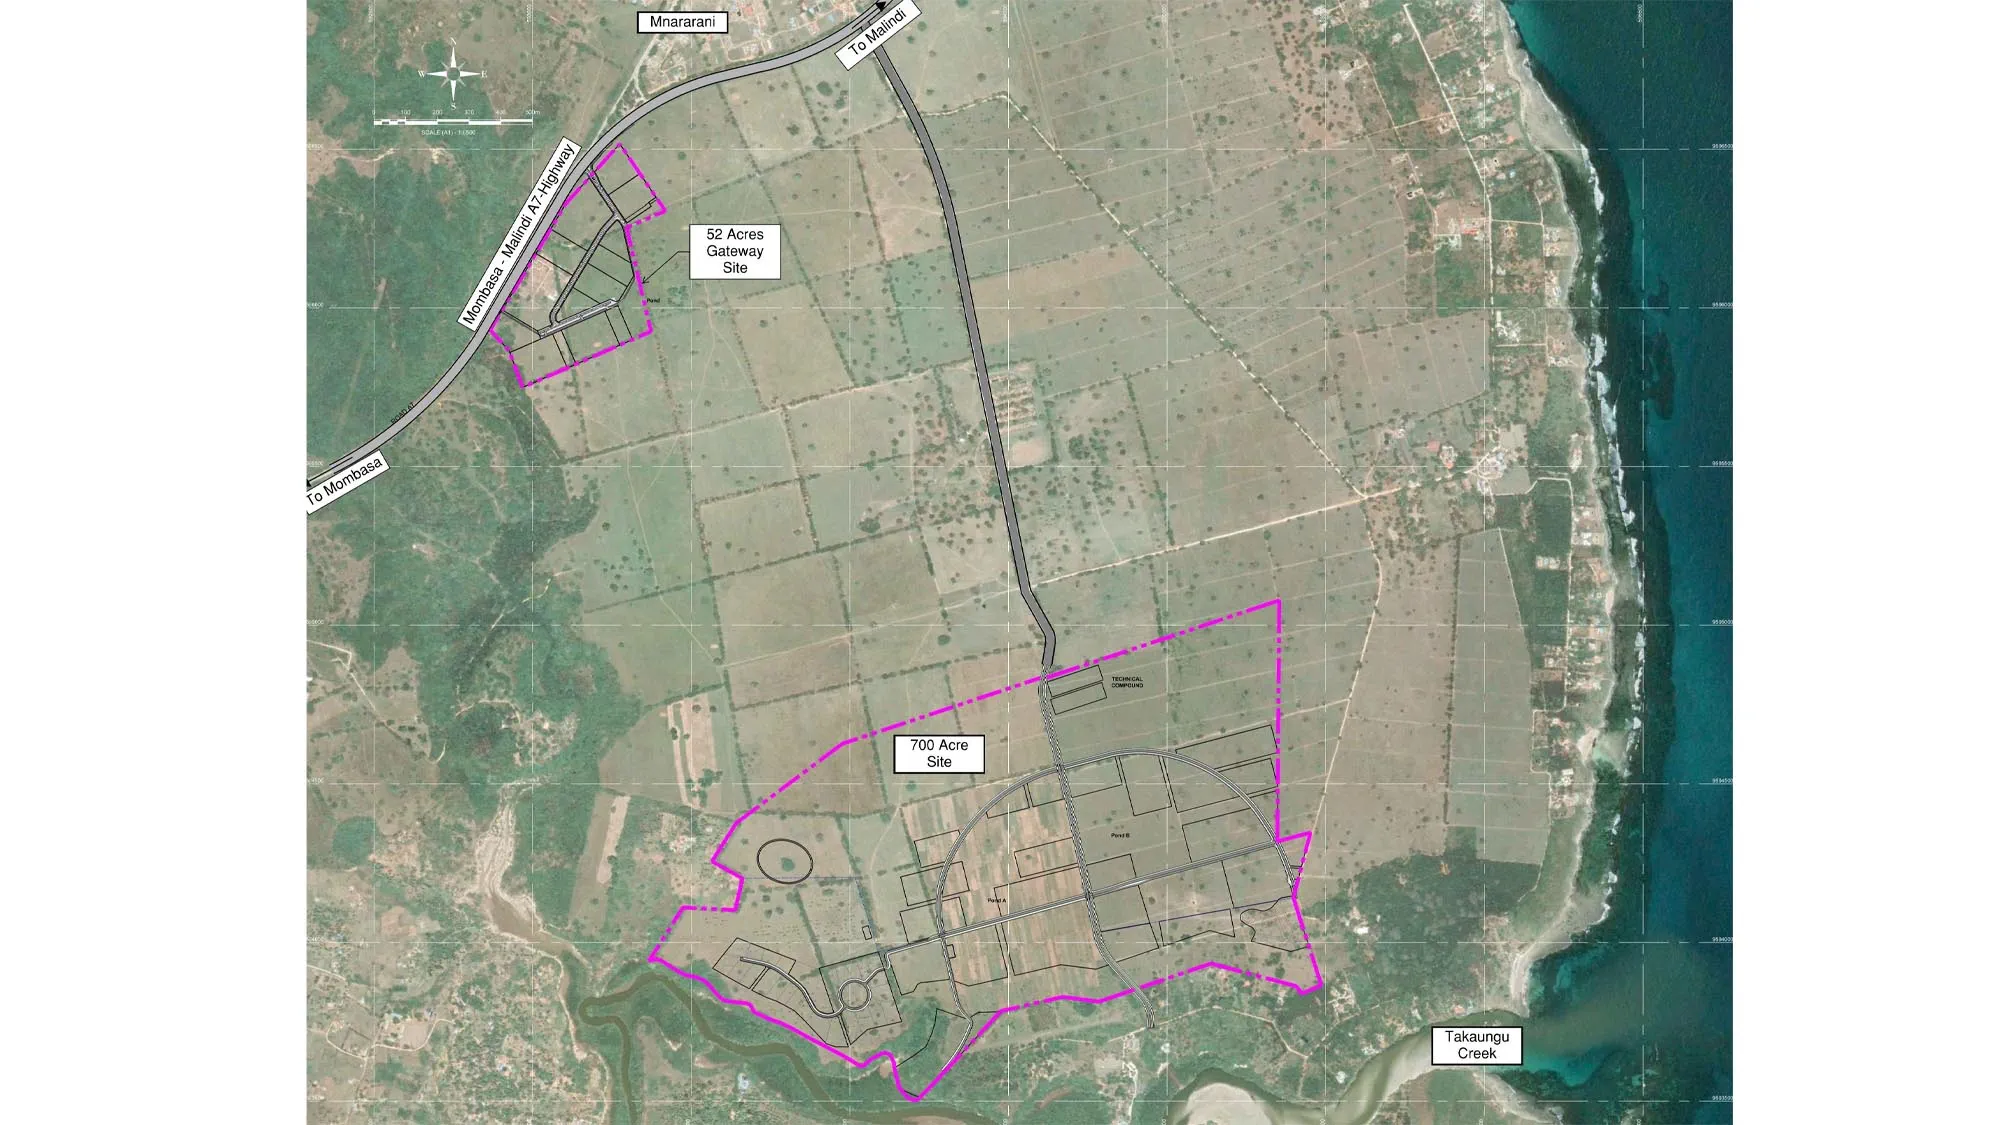 Plan of Green Heart of Kenya site